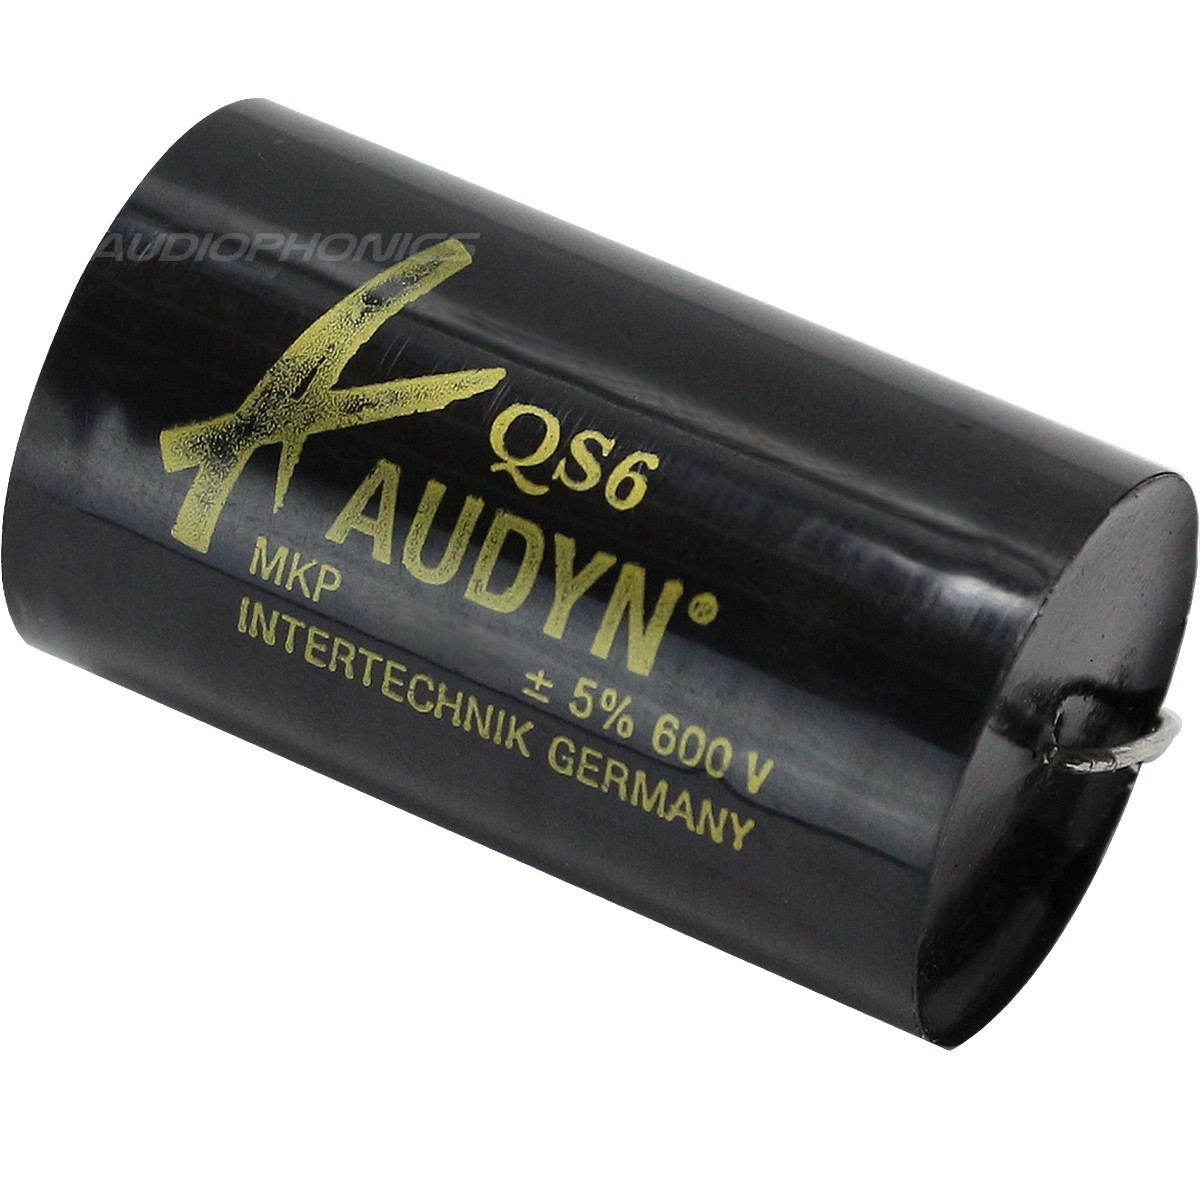 AUDYN CAP QS6 MKP Capacitor 600V 8.2μF